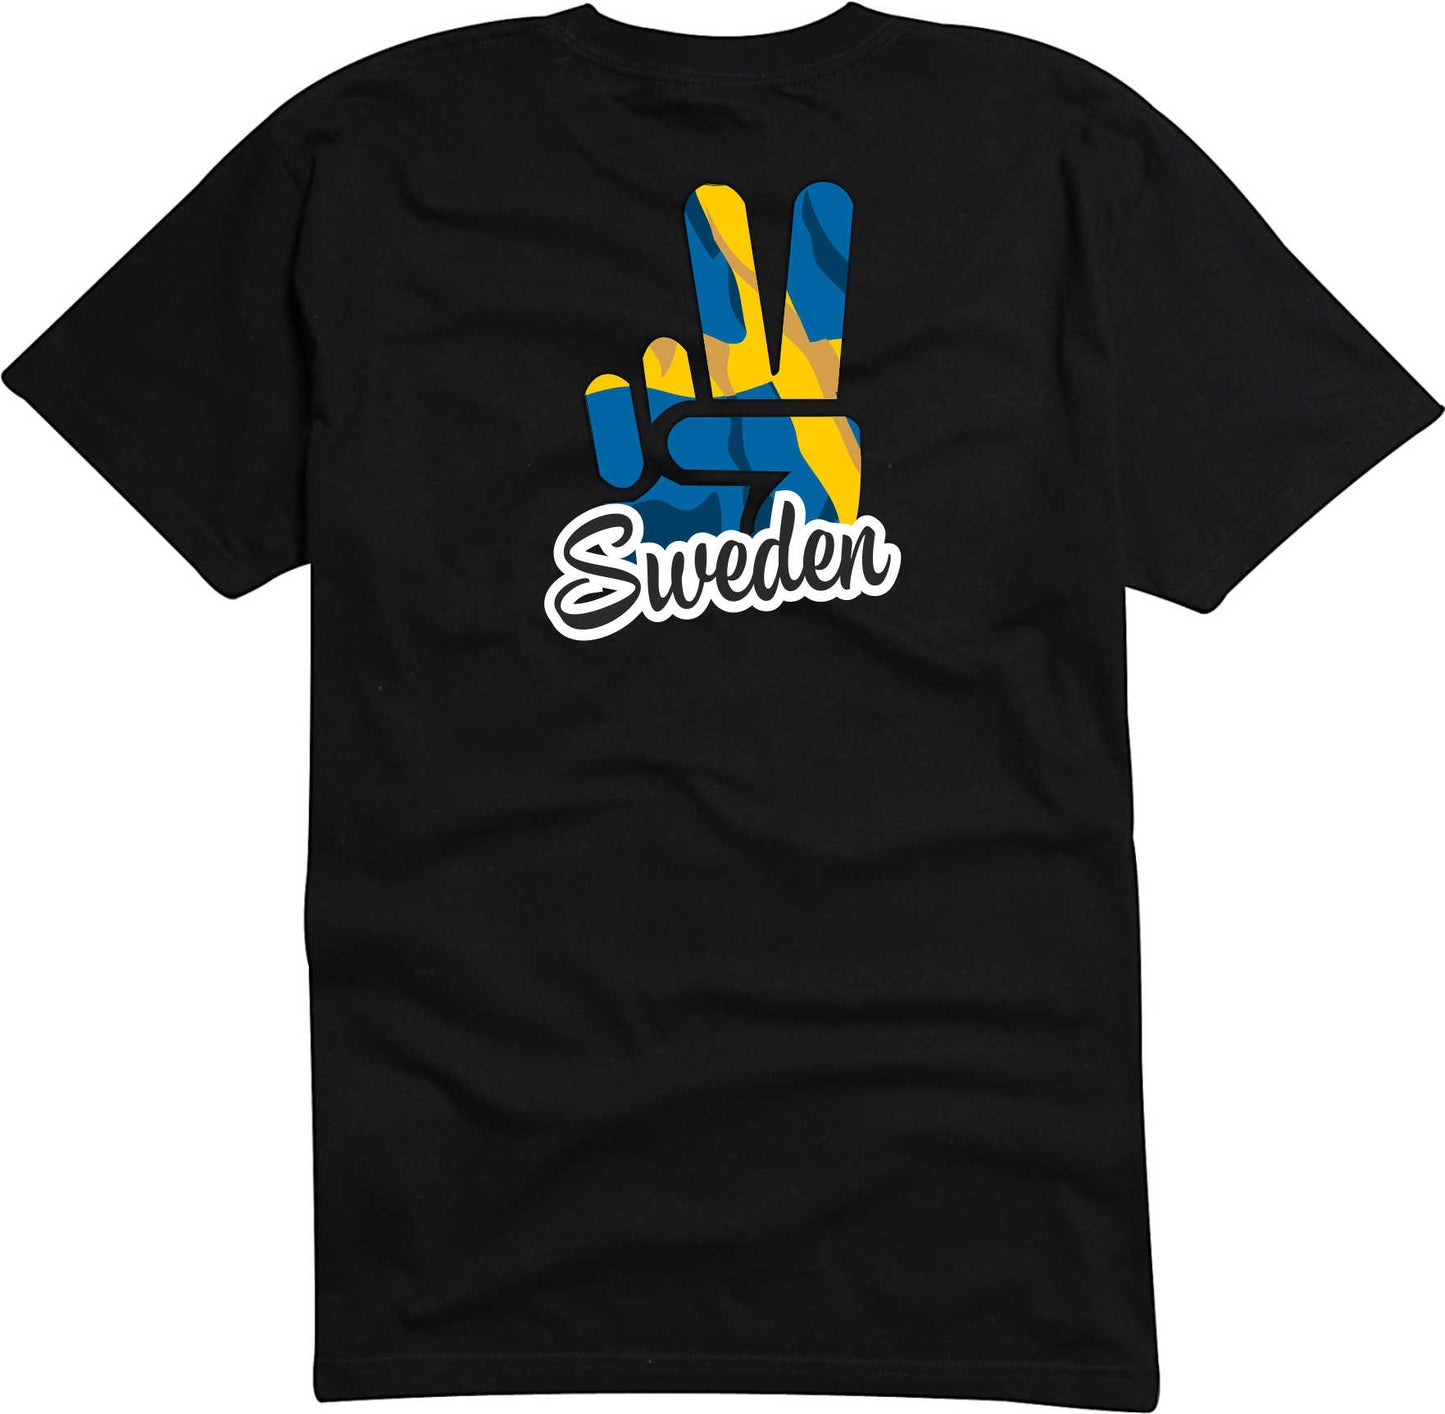 T-Shirt Herren - Victory - Flagge / Fahne - Sweden - Sieg